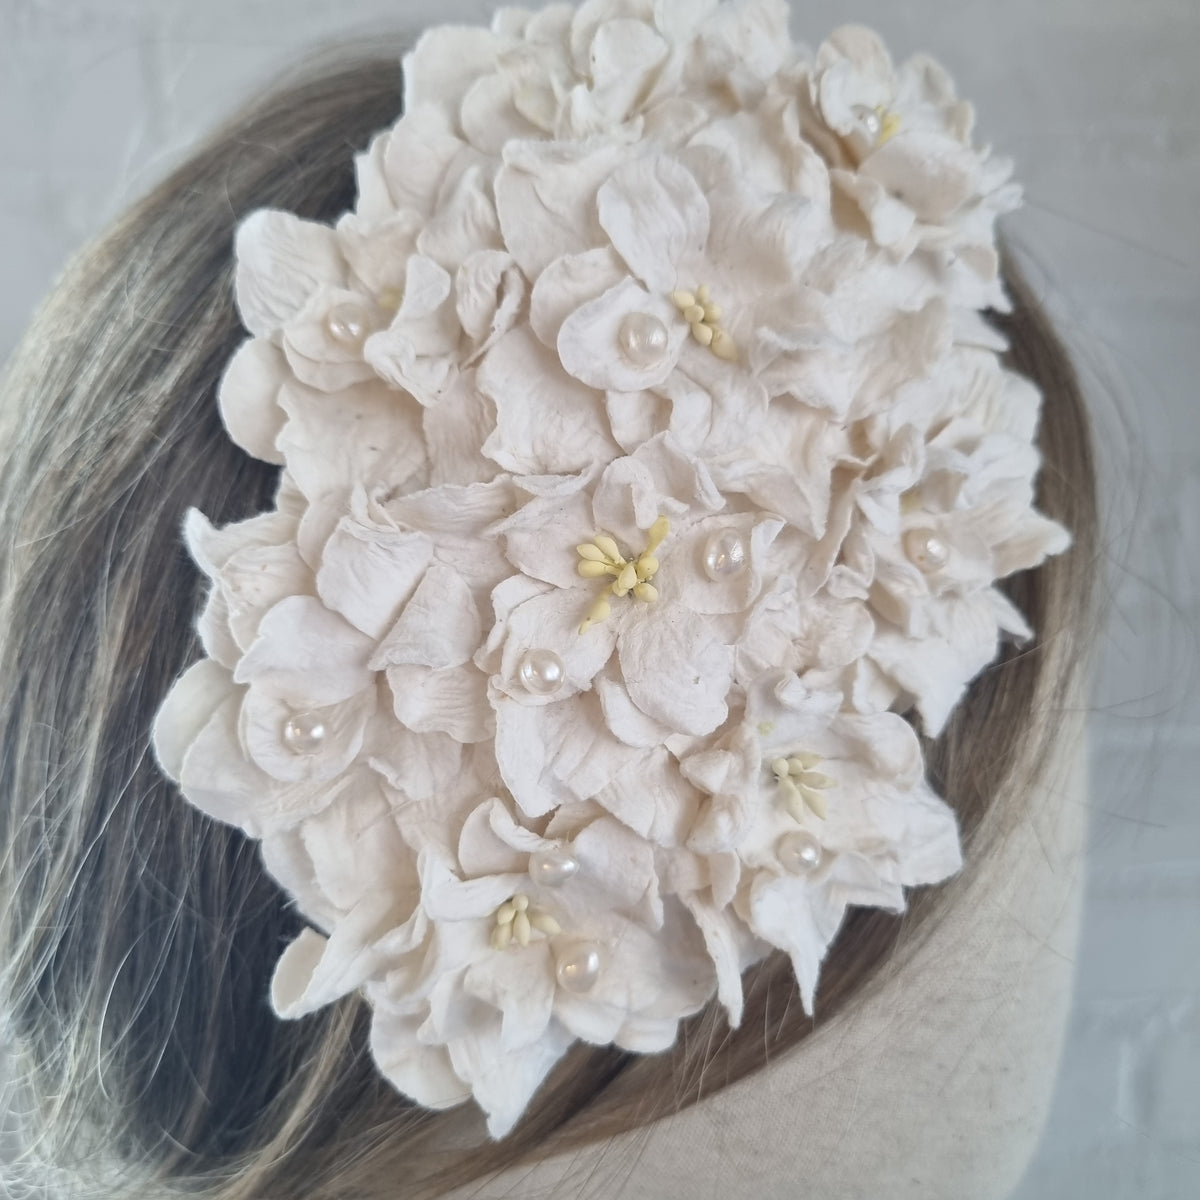 Fantastisk håndlavet fascinator med gardenia - Hårpynt med blomster og perler til bryllup, konfirmation og fest